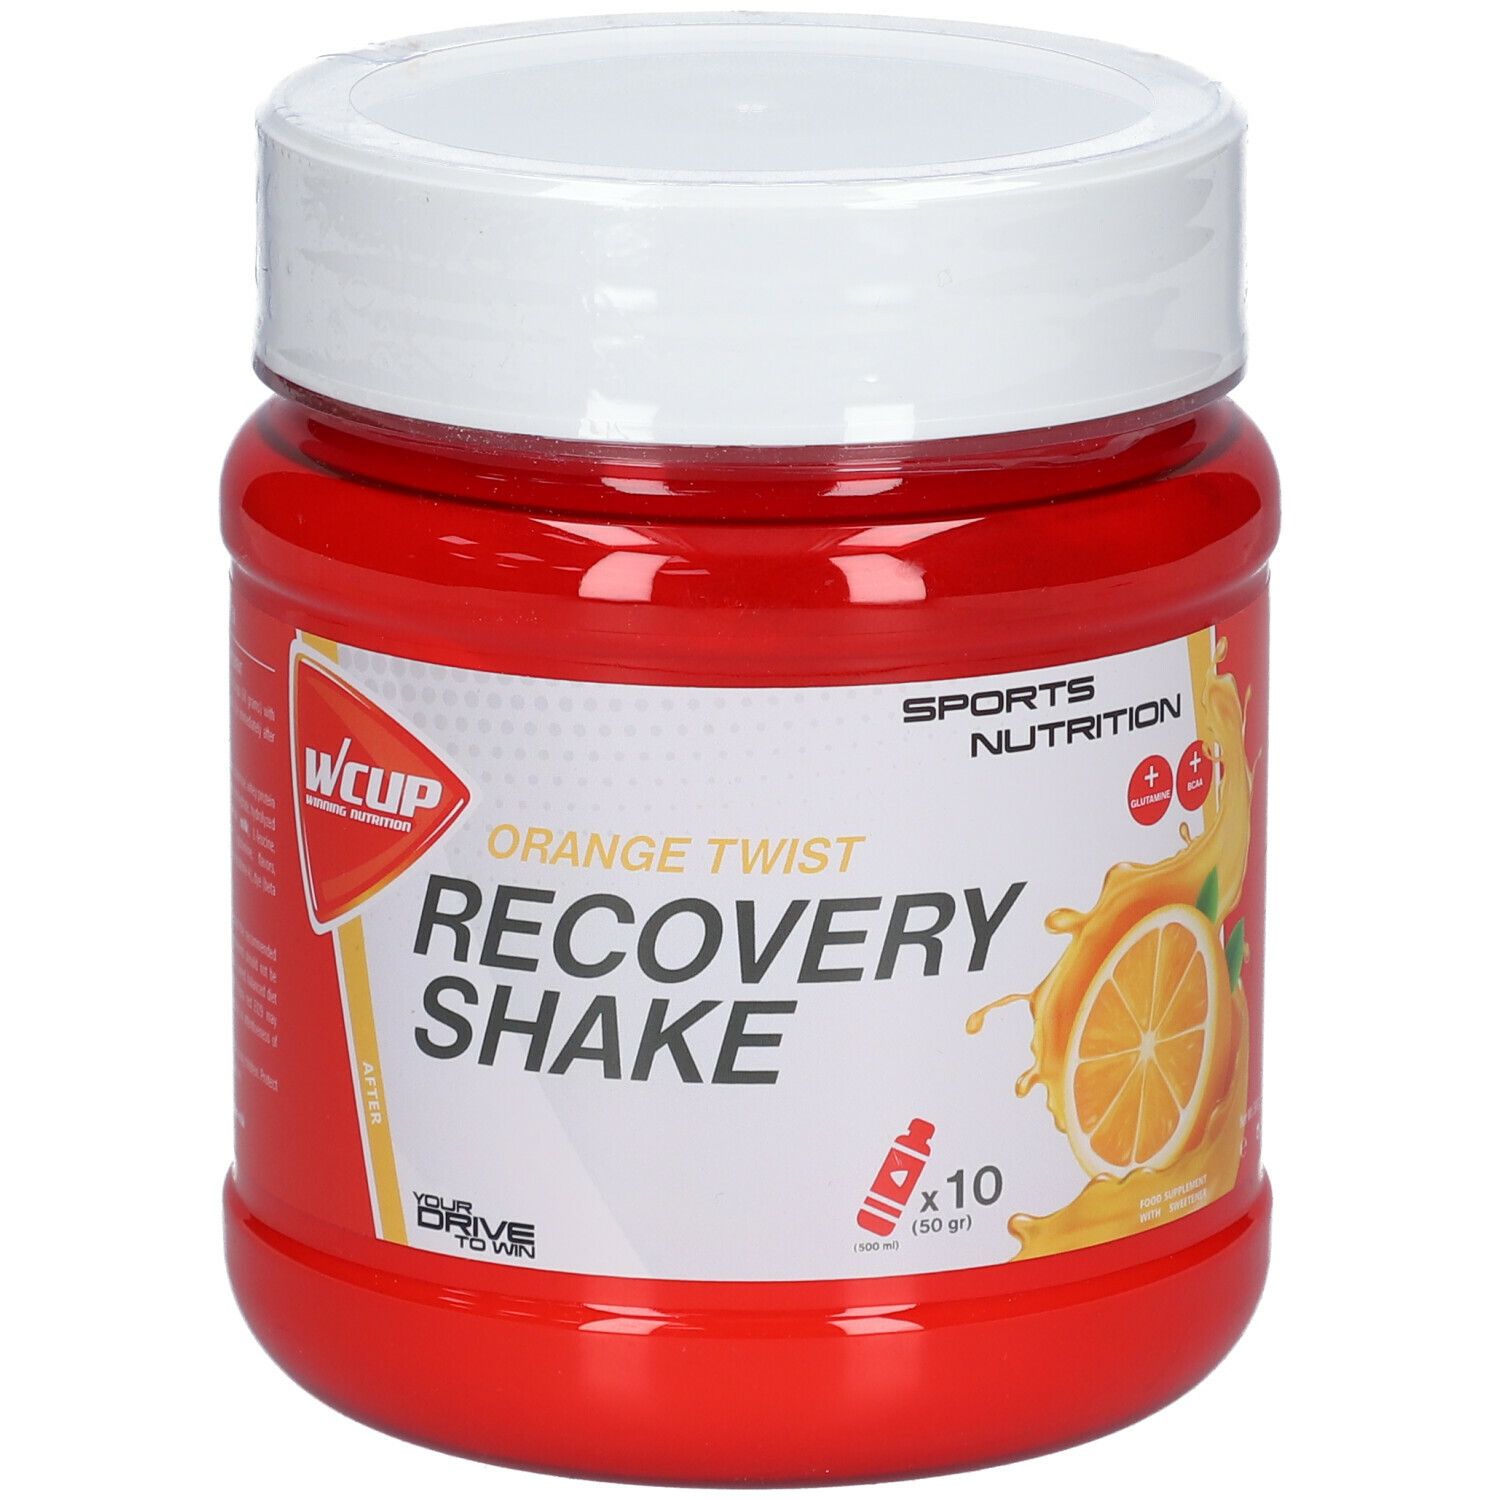 Wcup Recovery Shake Orange Twist